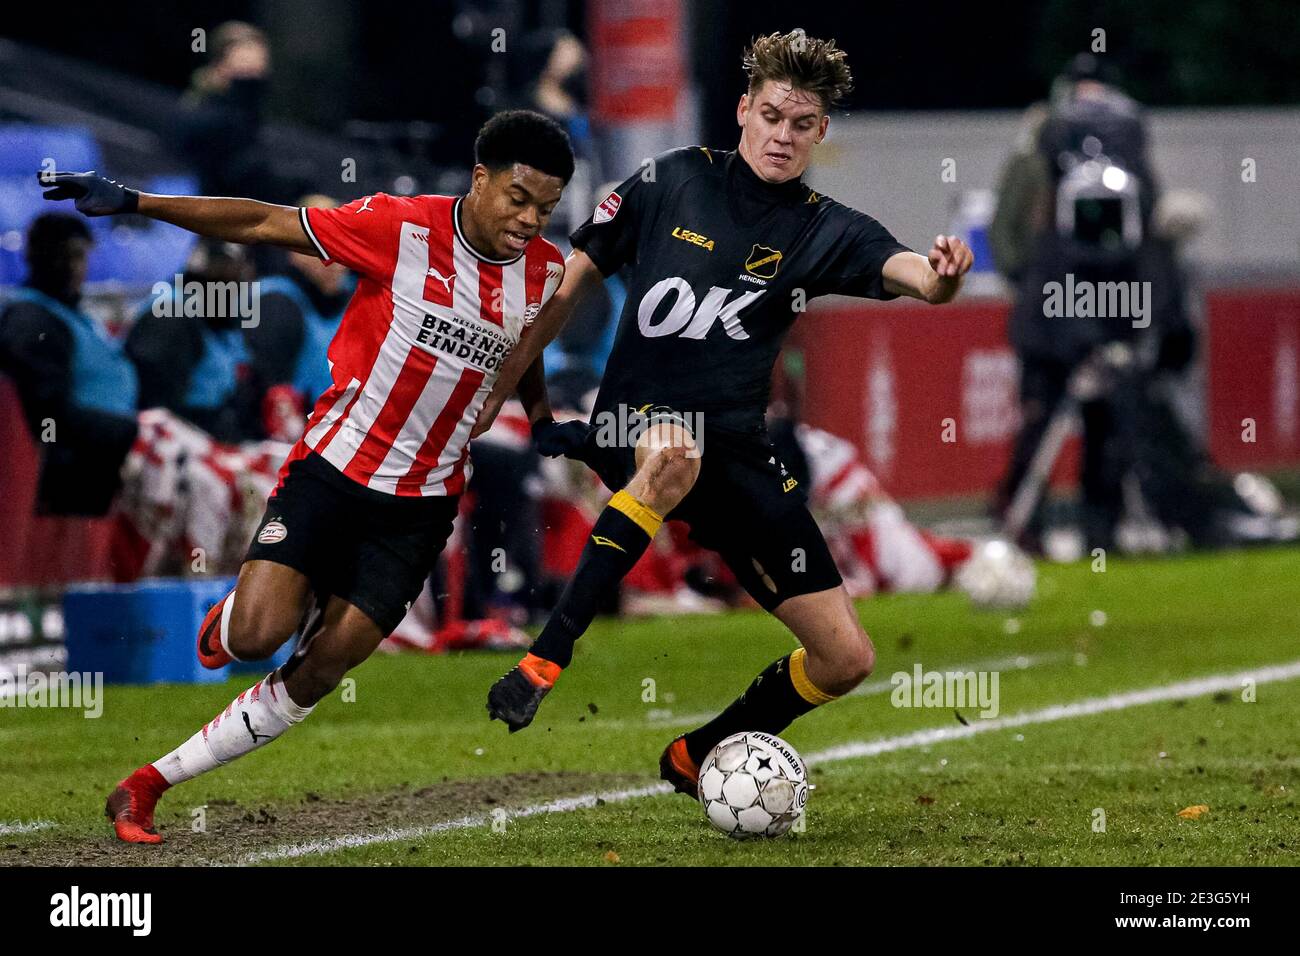 EINDHOVEN, NETHERLANDS - JANUARY 18: (L-R): Nigel Thomas of Jong PSV, Ramon Hendriks of NAC Breda during the Dutch Keukenkampioendivisie match between Stock Photo